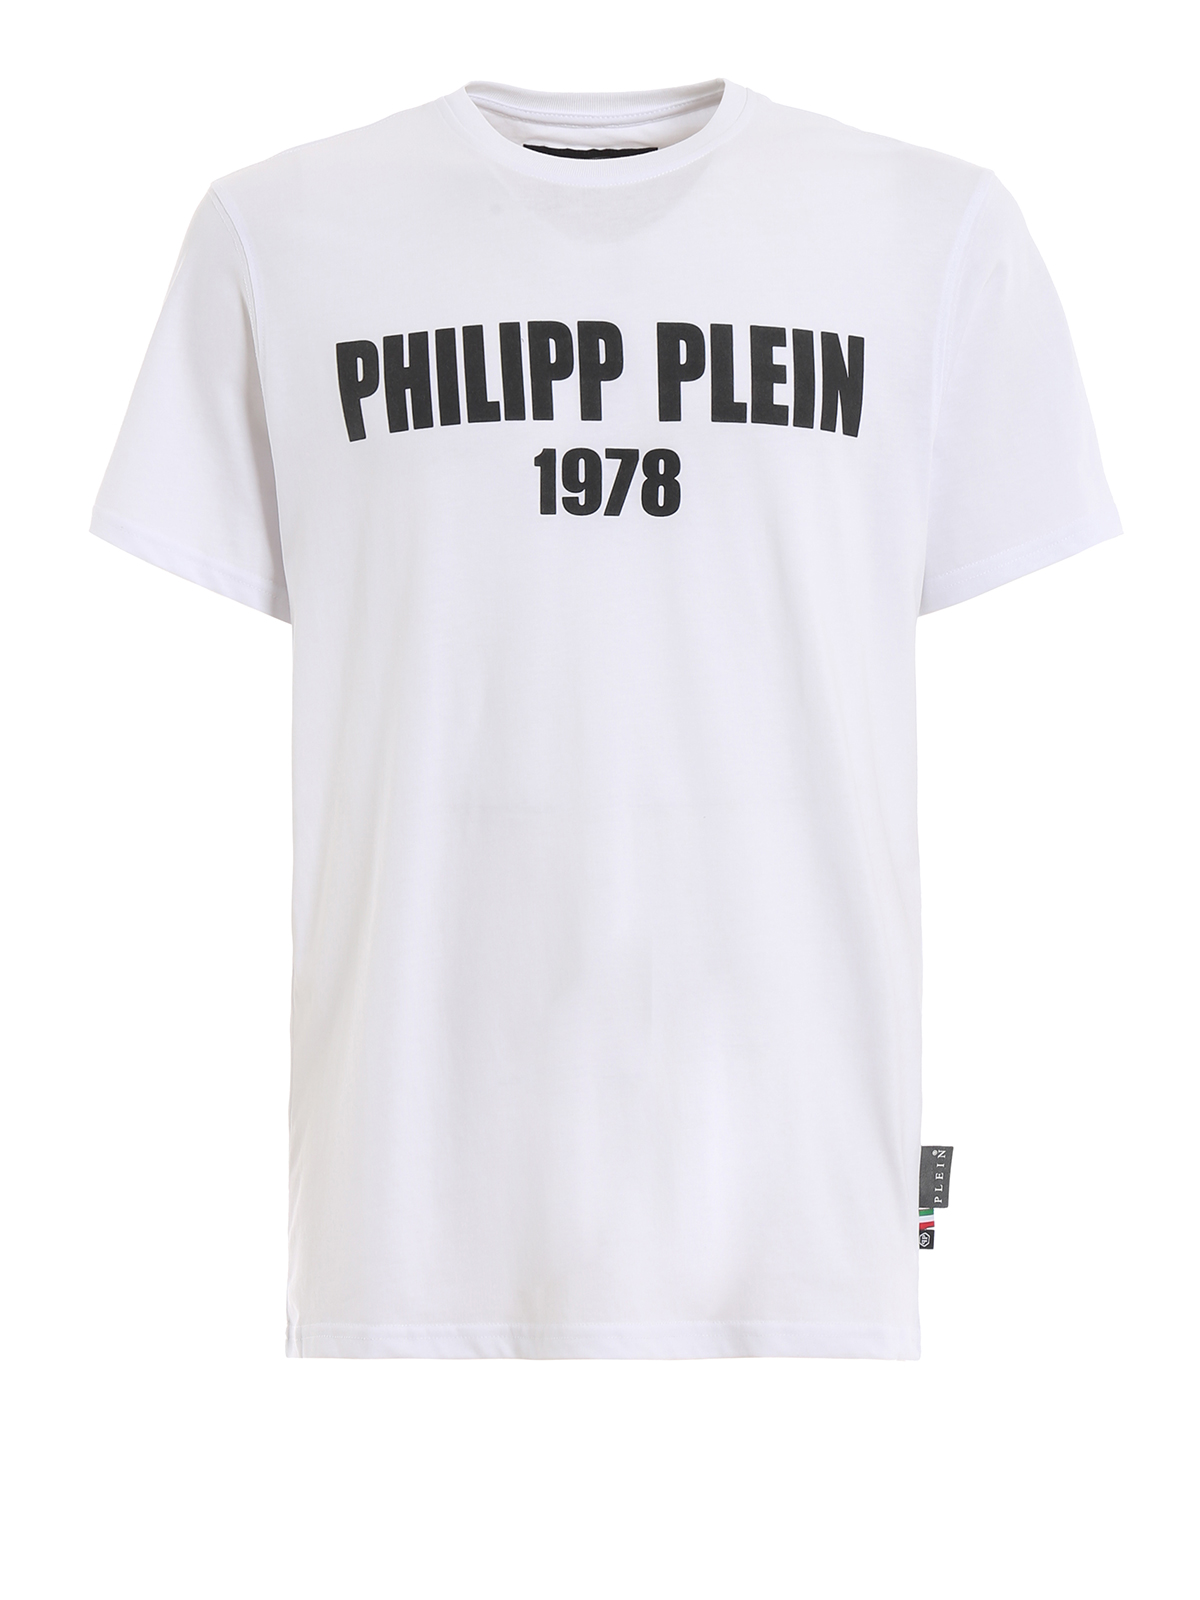 Philipp plein Tシャツ